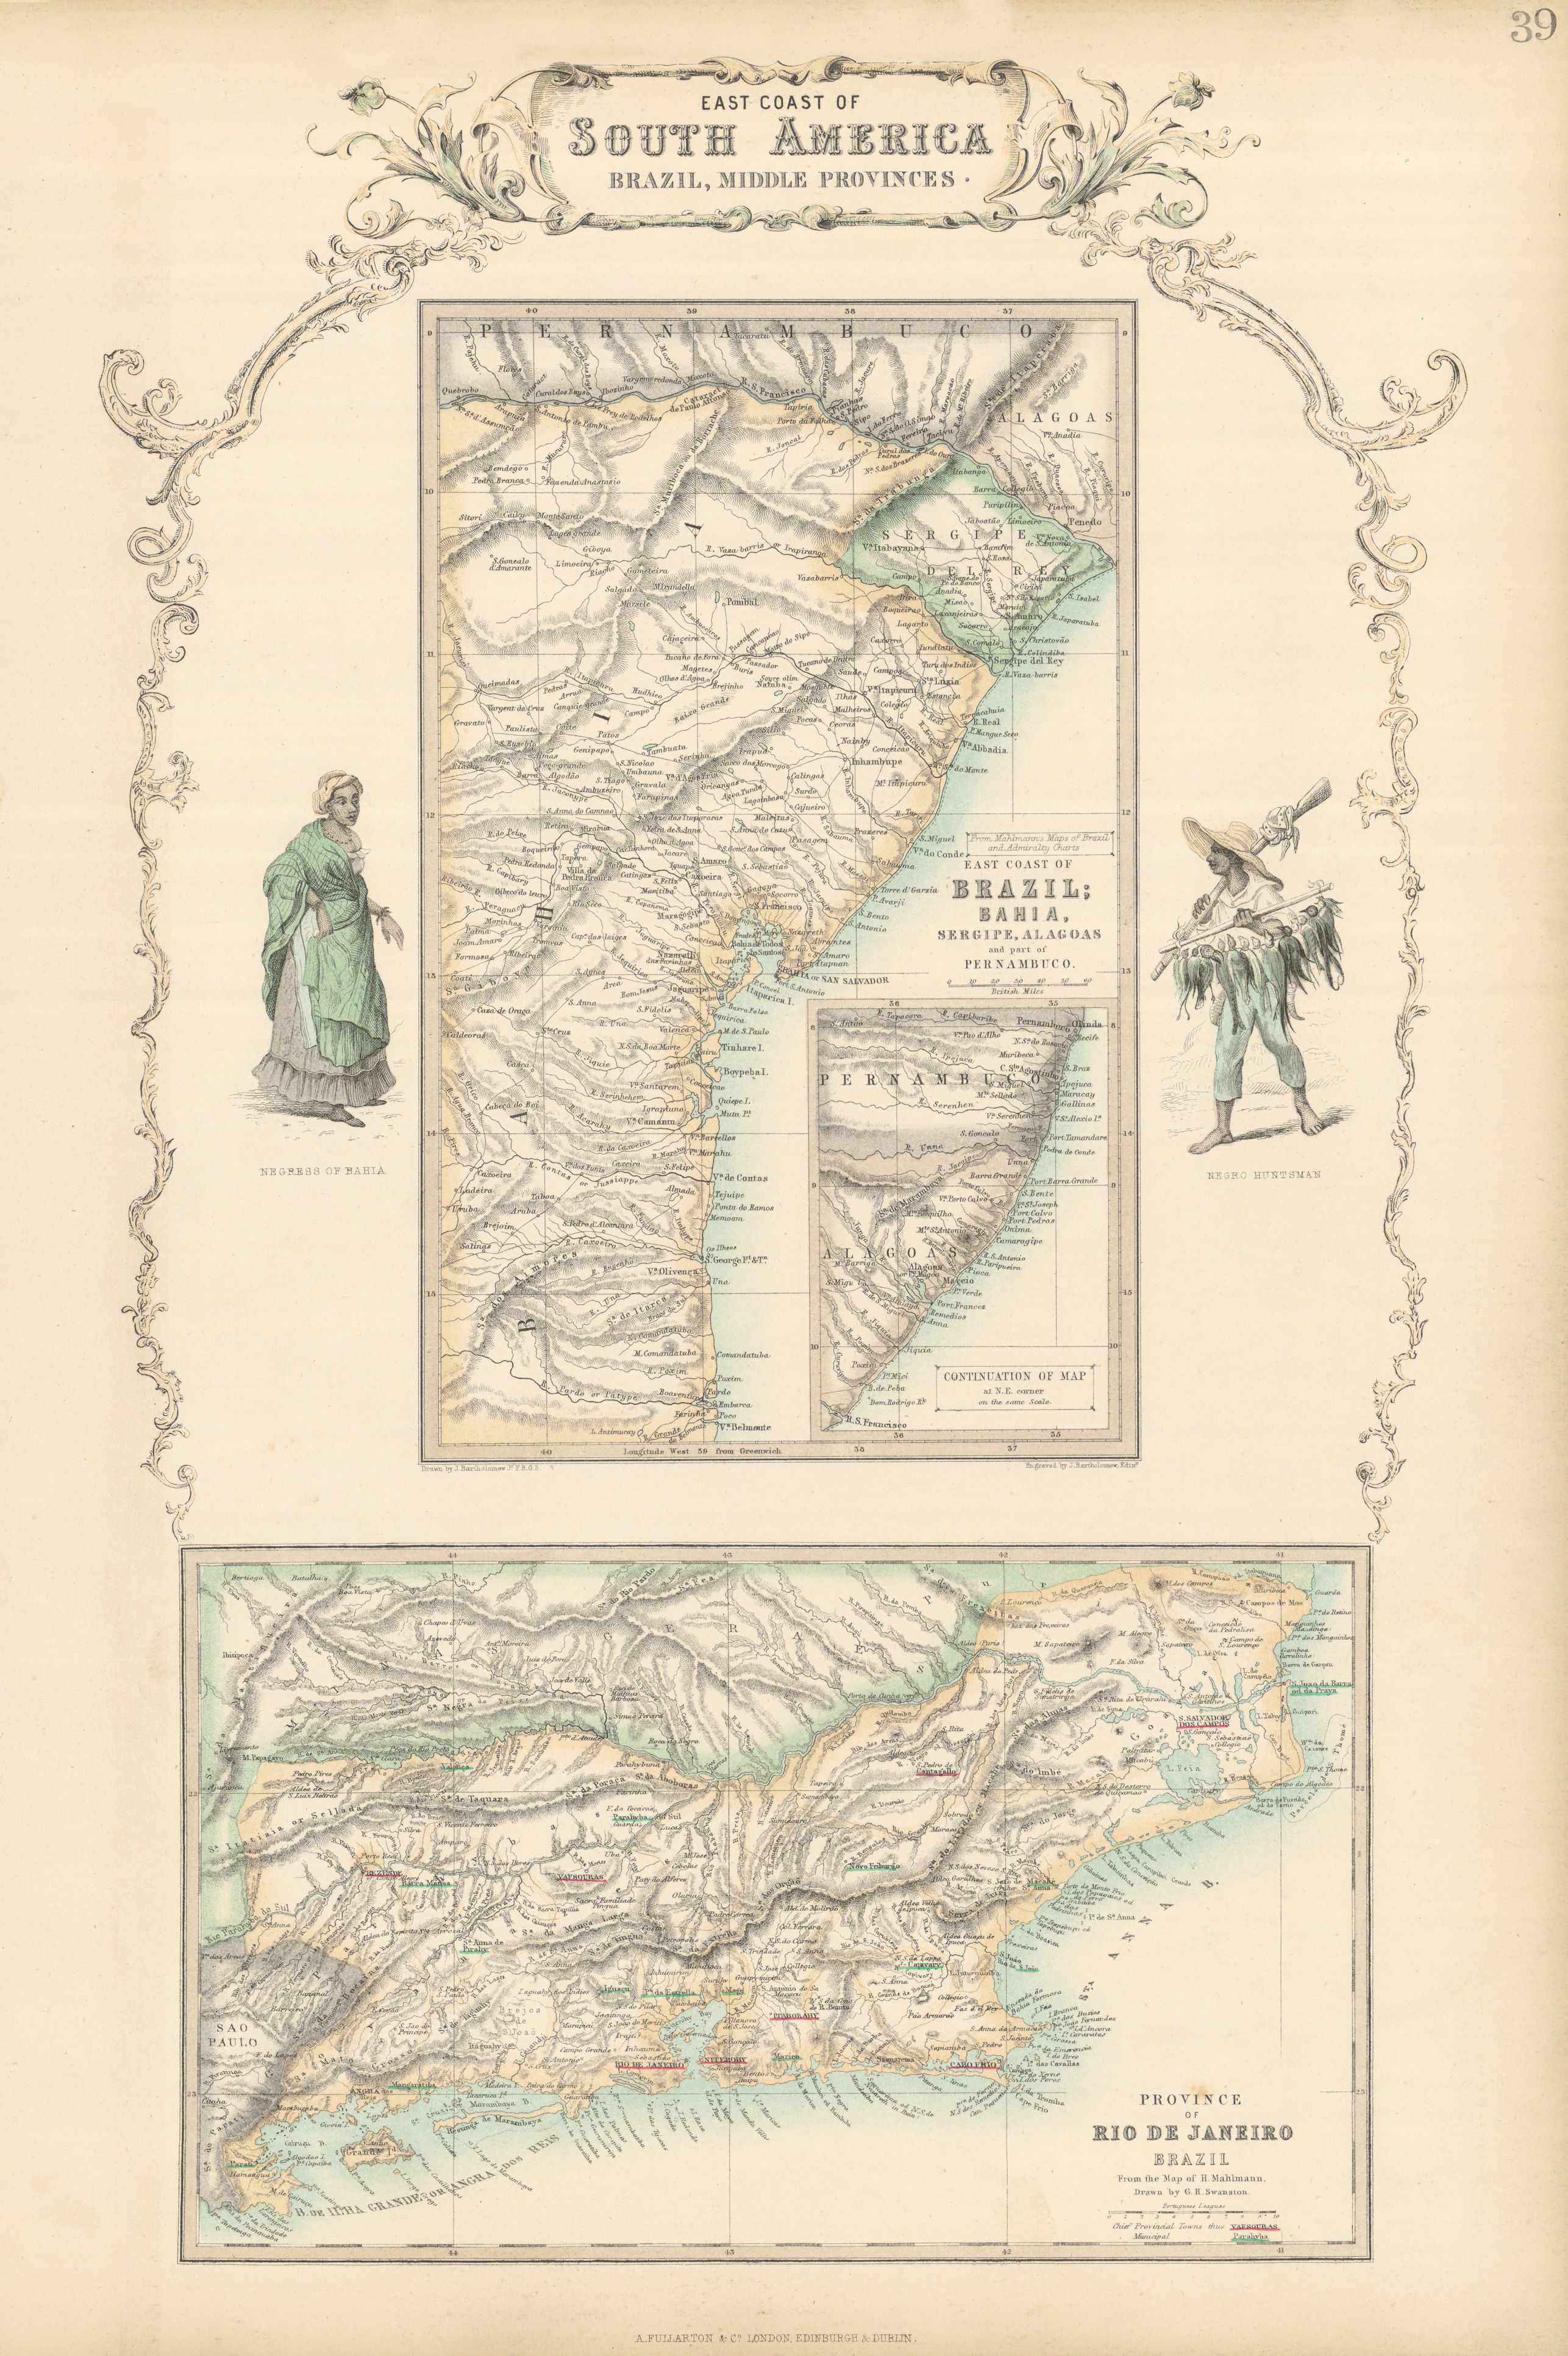 Associate Product Brazil. South America East Coast. Bahia. Rio de Janeiro. SWANSTON 1860 old map